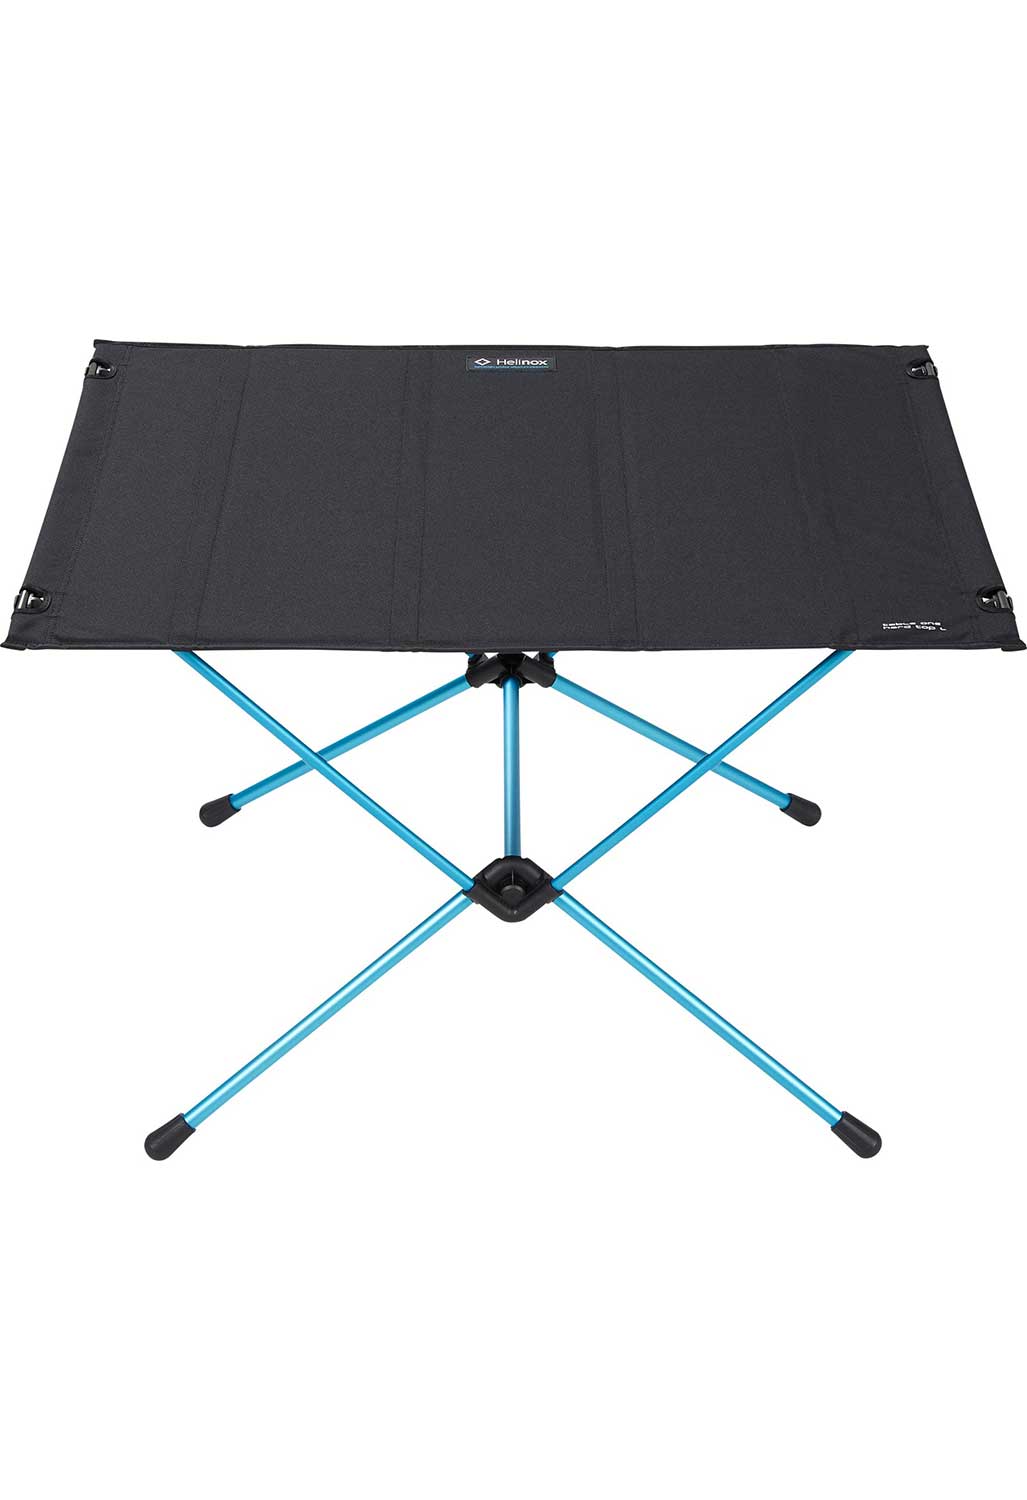 Helinox Table One Hard Top - Large - Black/Blue